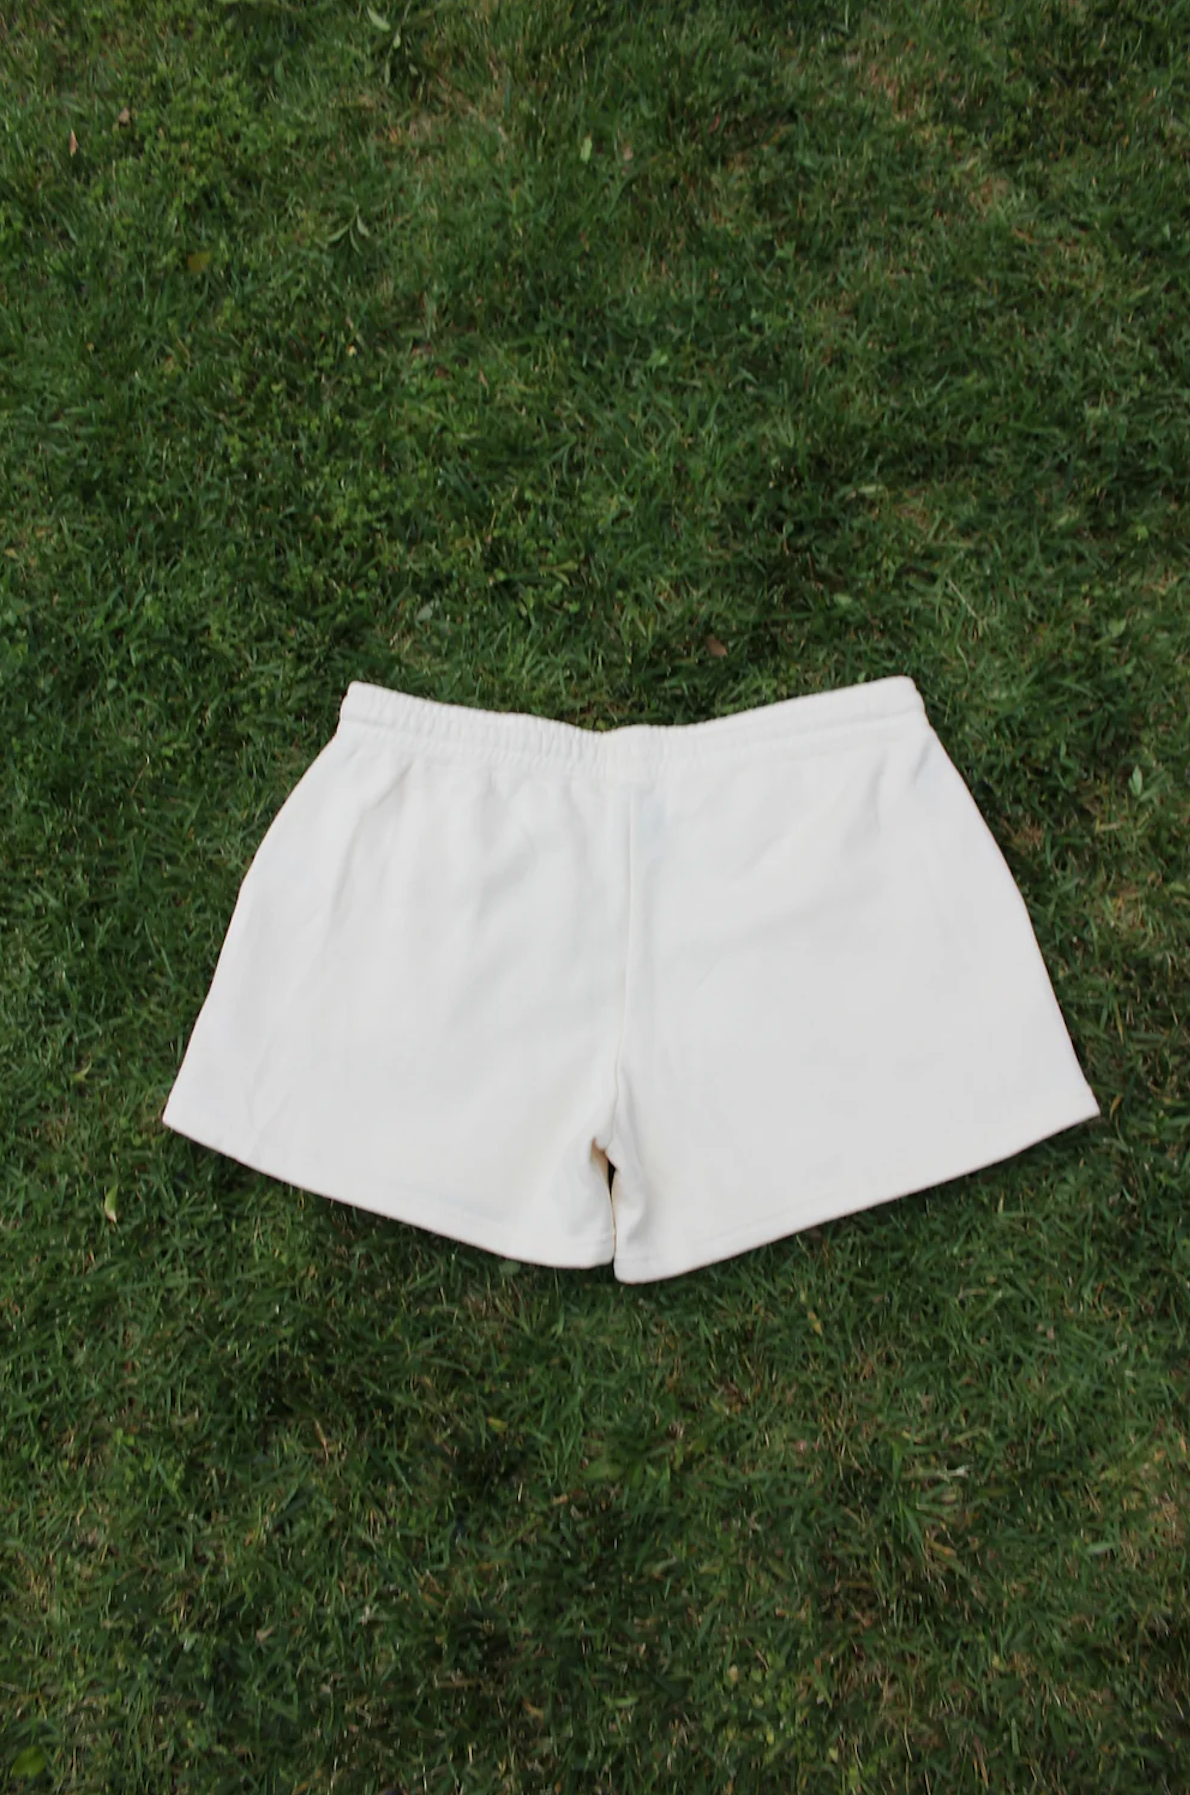 Lanilei Shorts - Cream White